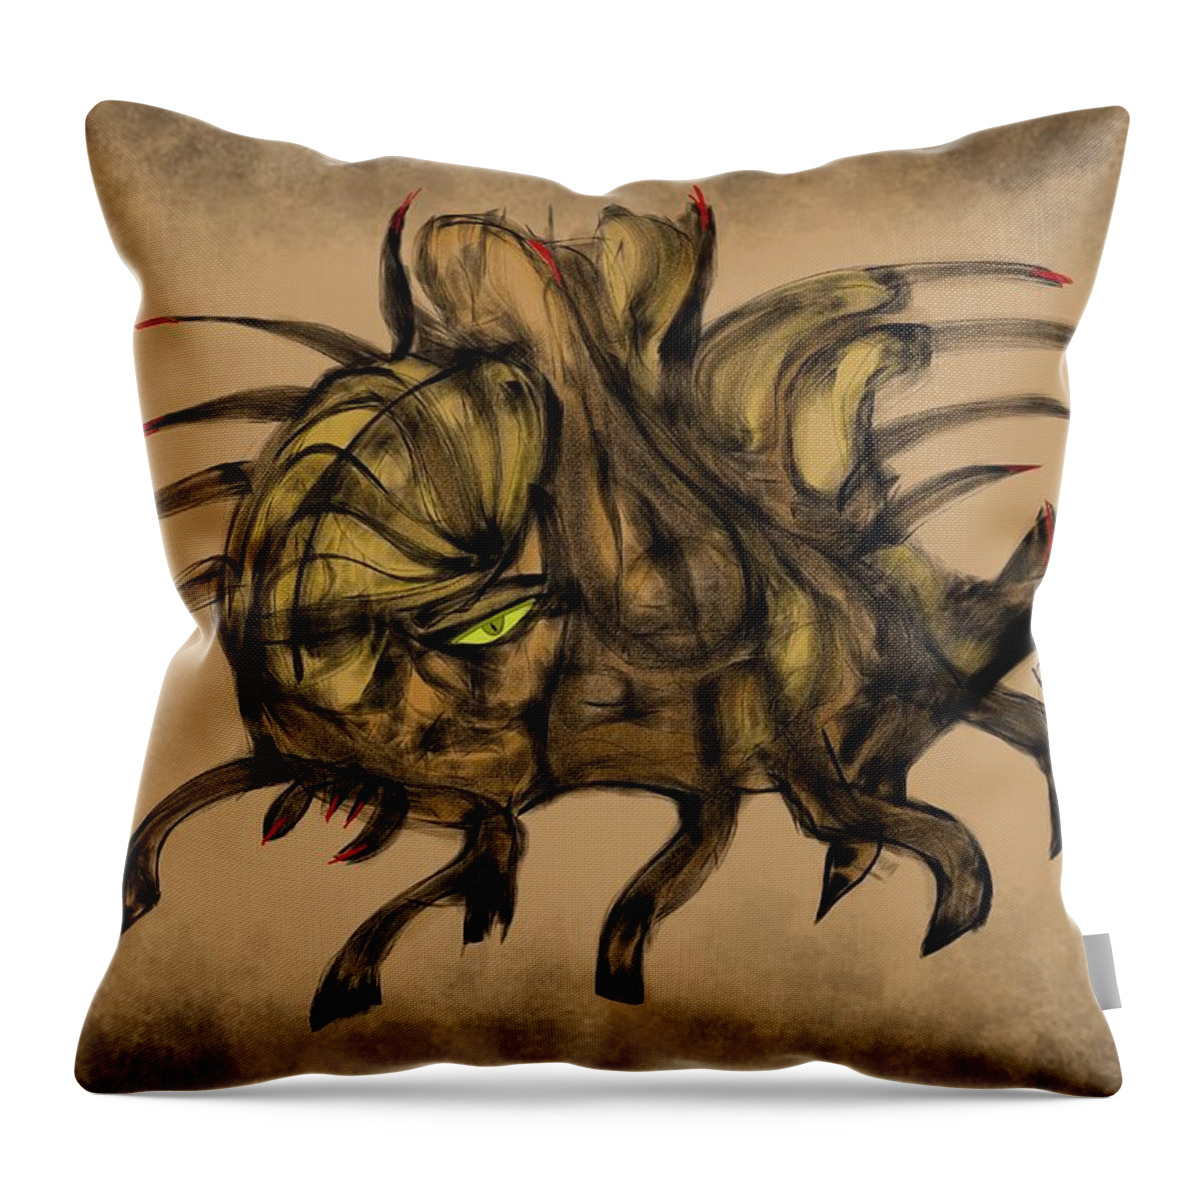 Spider Throw Pillow featuring the digital art Spider dance by Ljev Rjadcenko